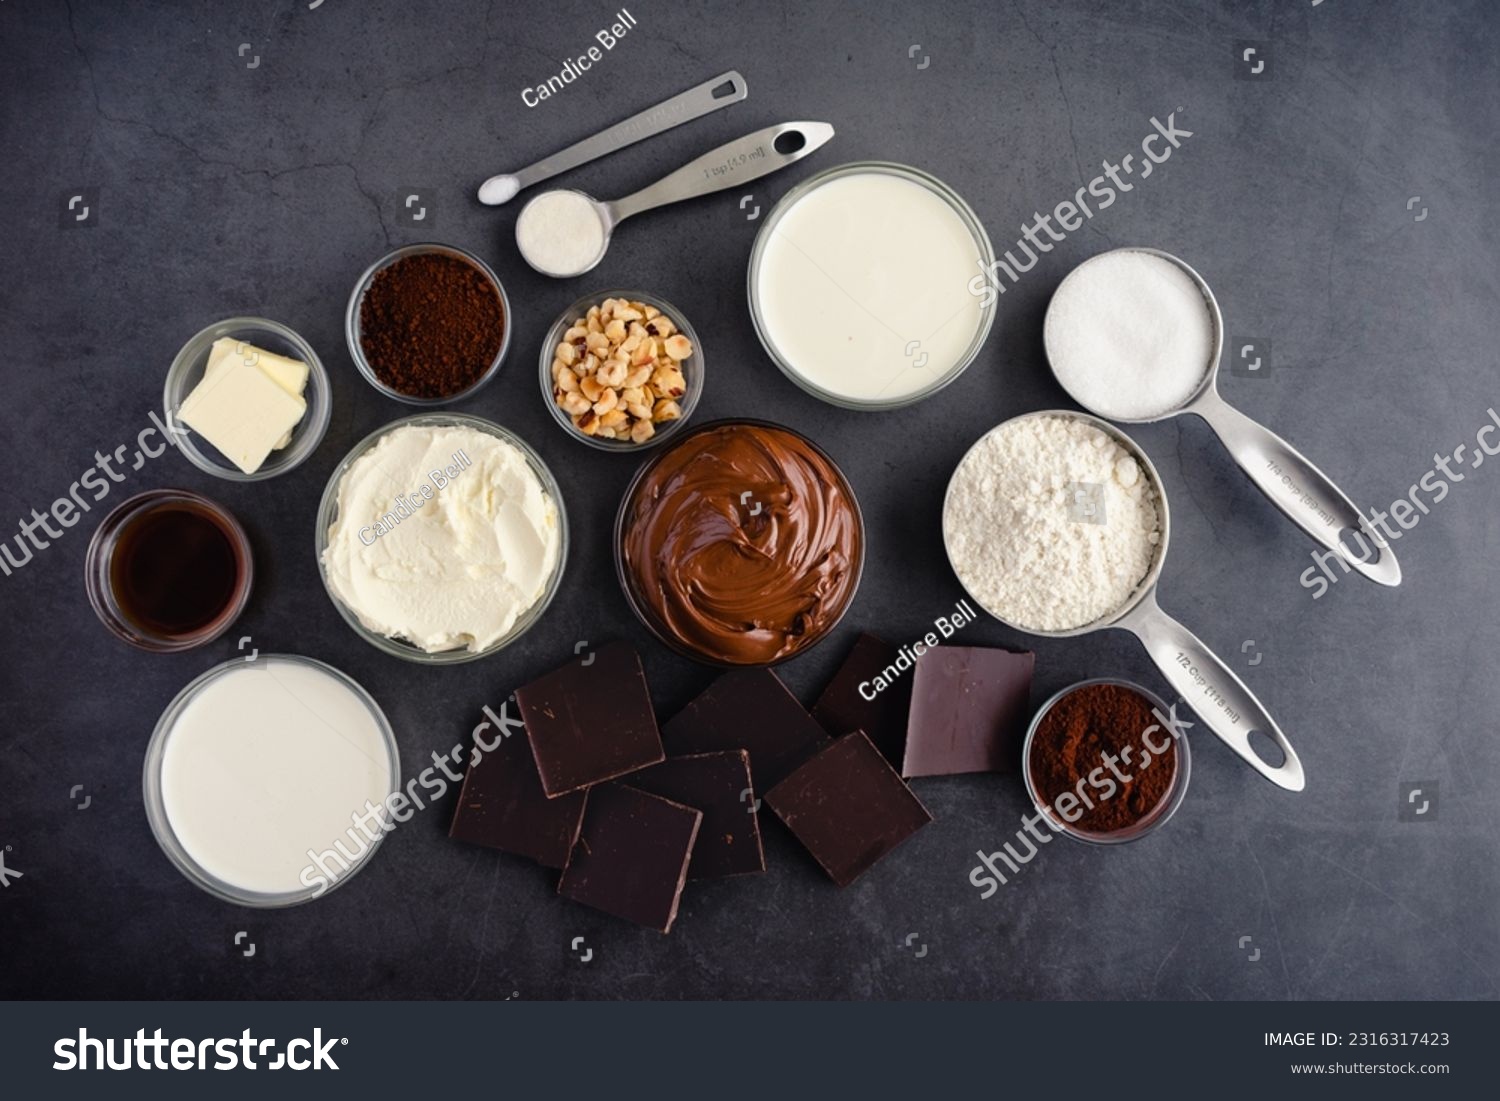 Chocolate Hazelnut Mousse Cake Ingredients on a Dark Background: Hazelnut spread, dark chocolate, cream, and other cake ingredients #2316317423